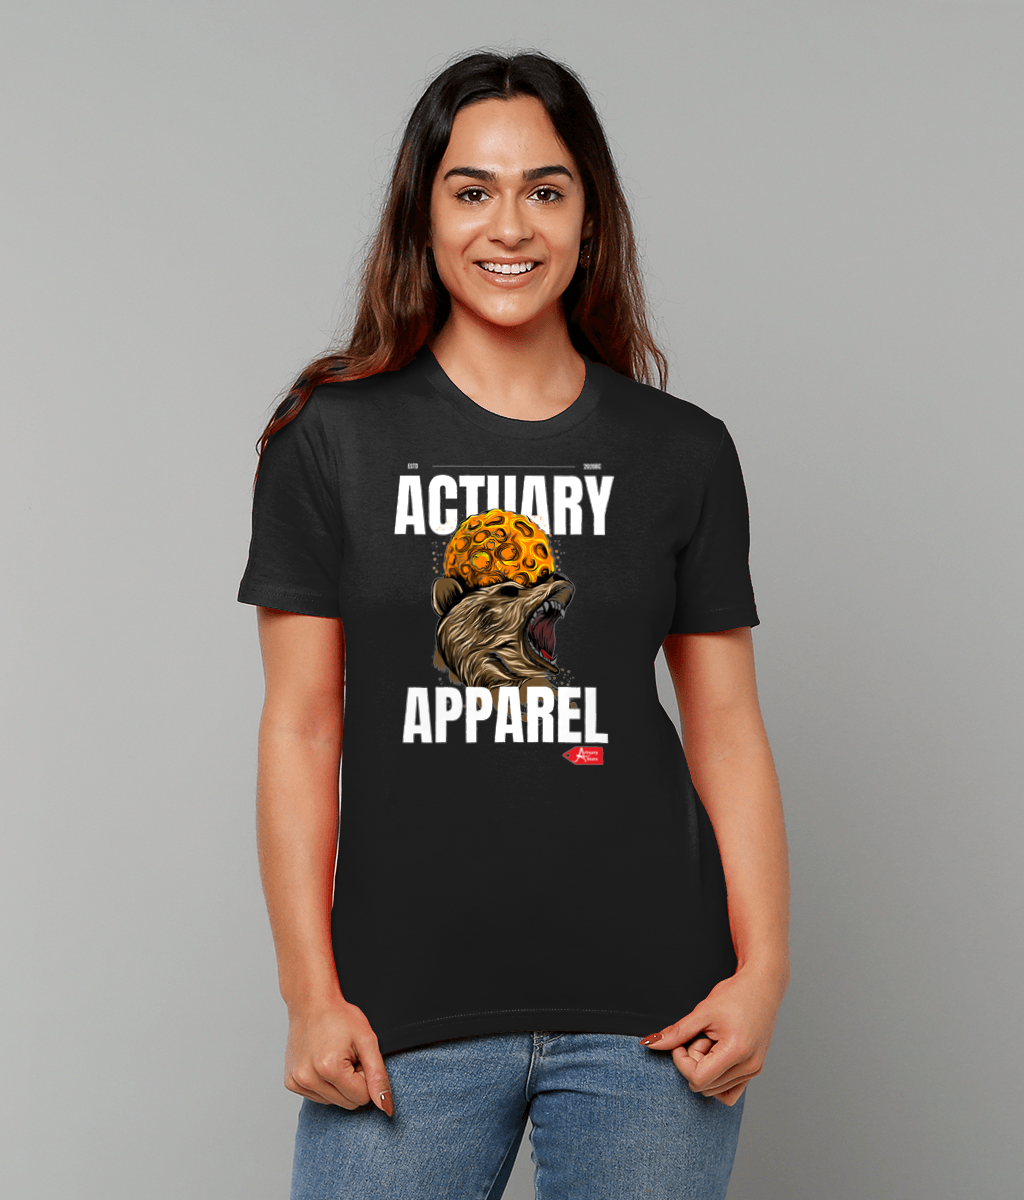 Actuary Black Bear Angry Apparel Illustrated Skull Black T-shirt